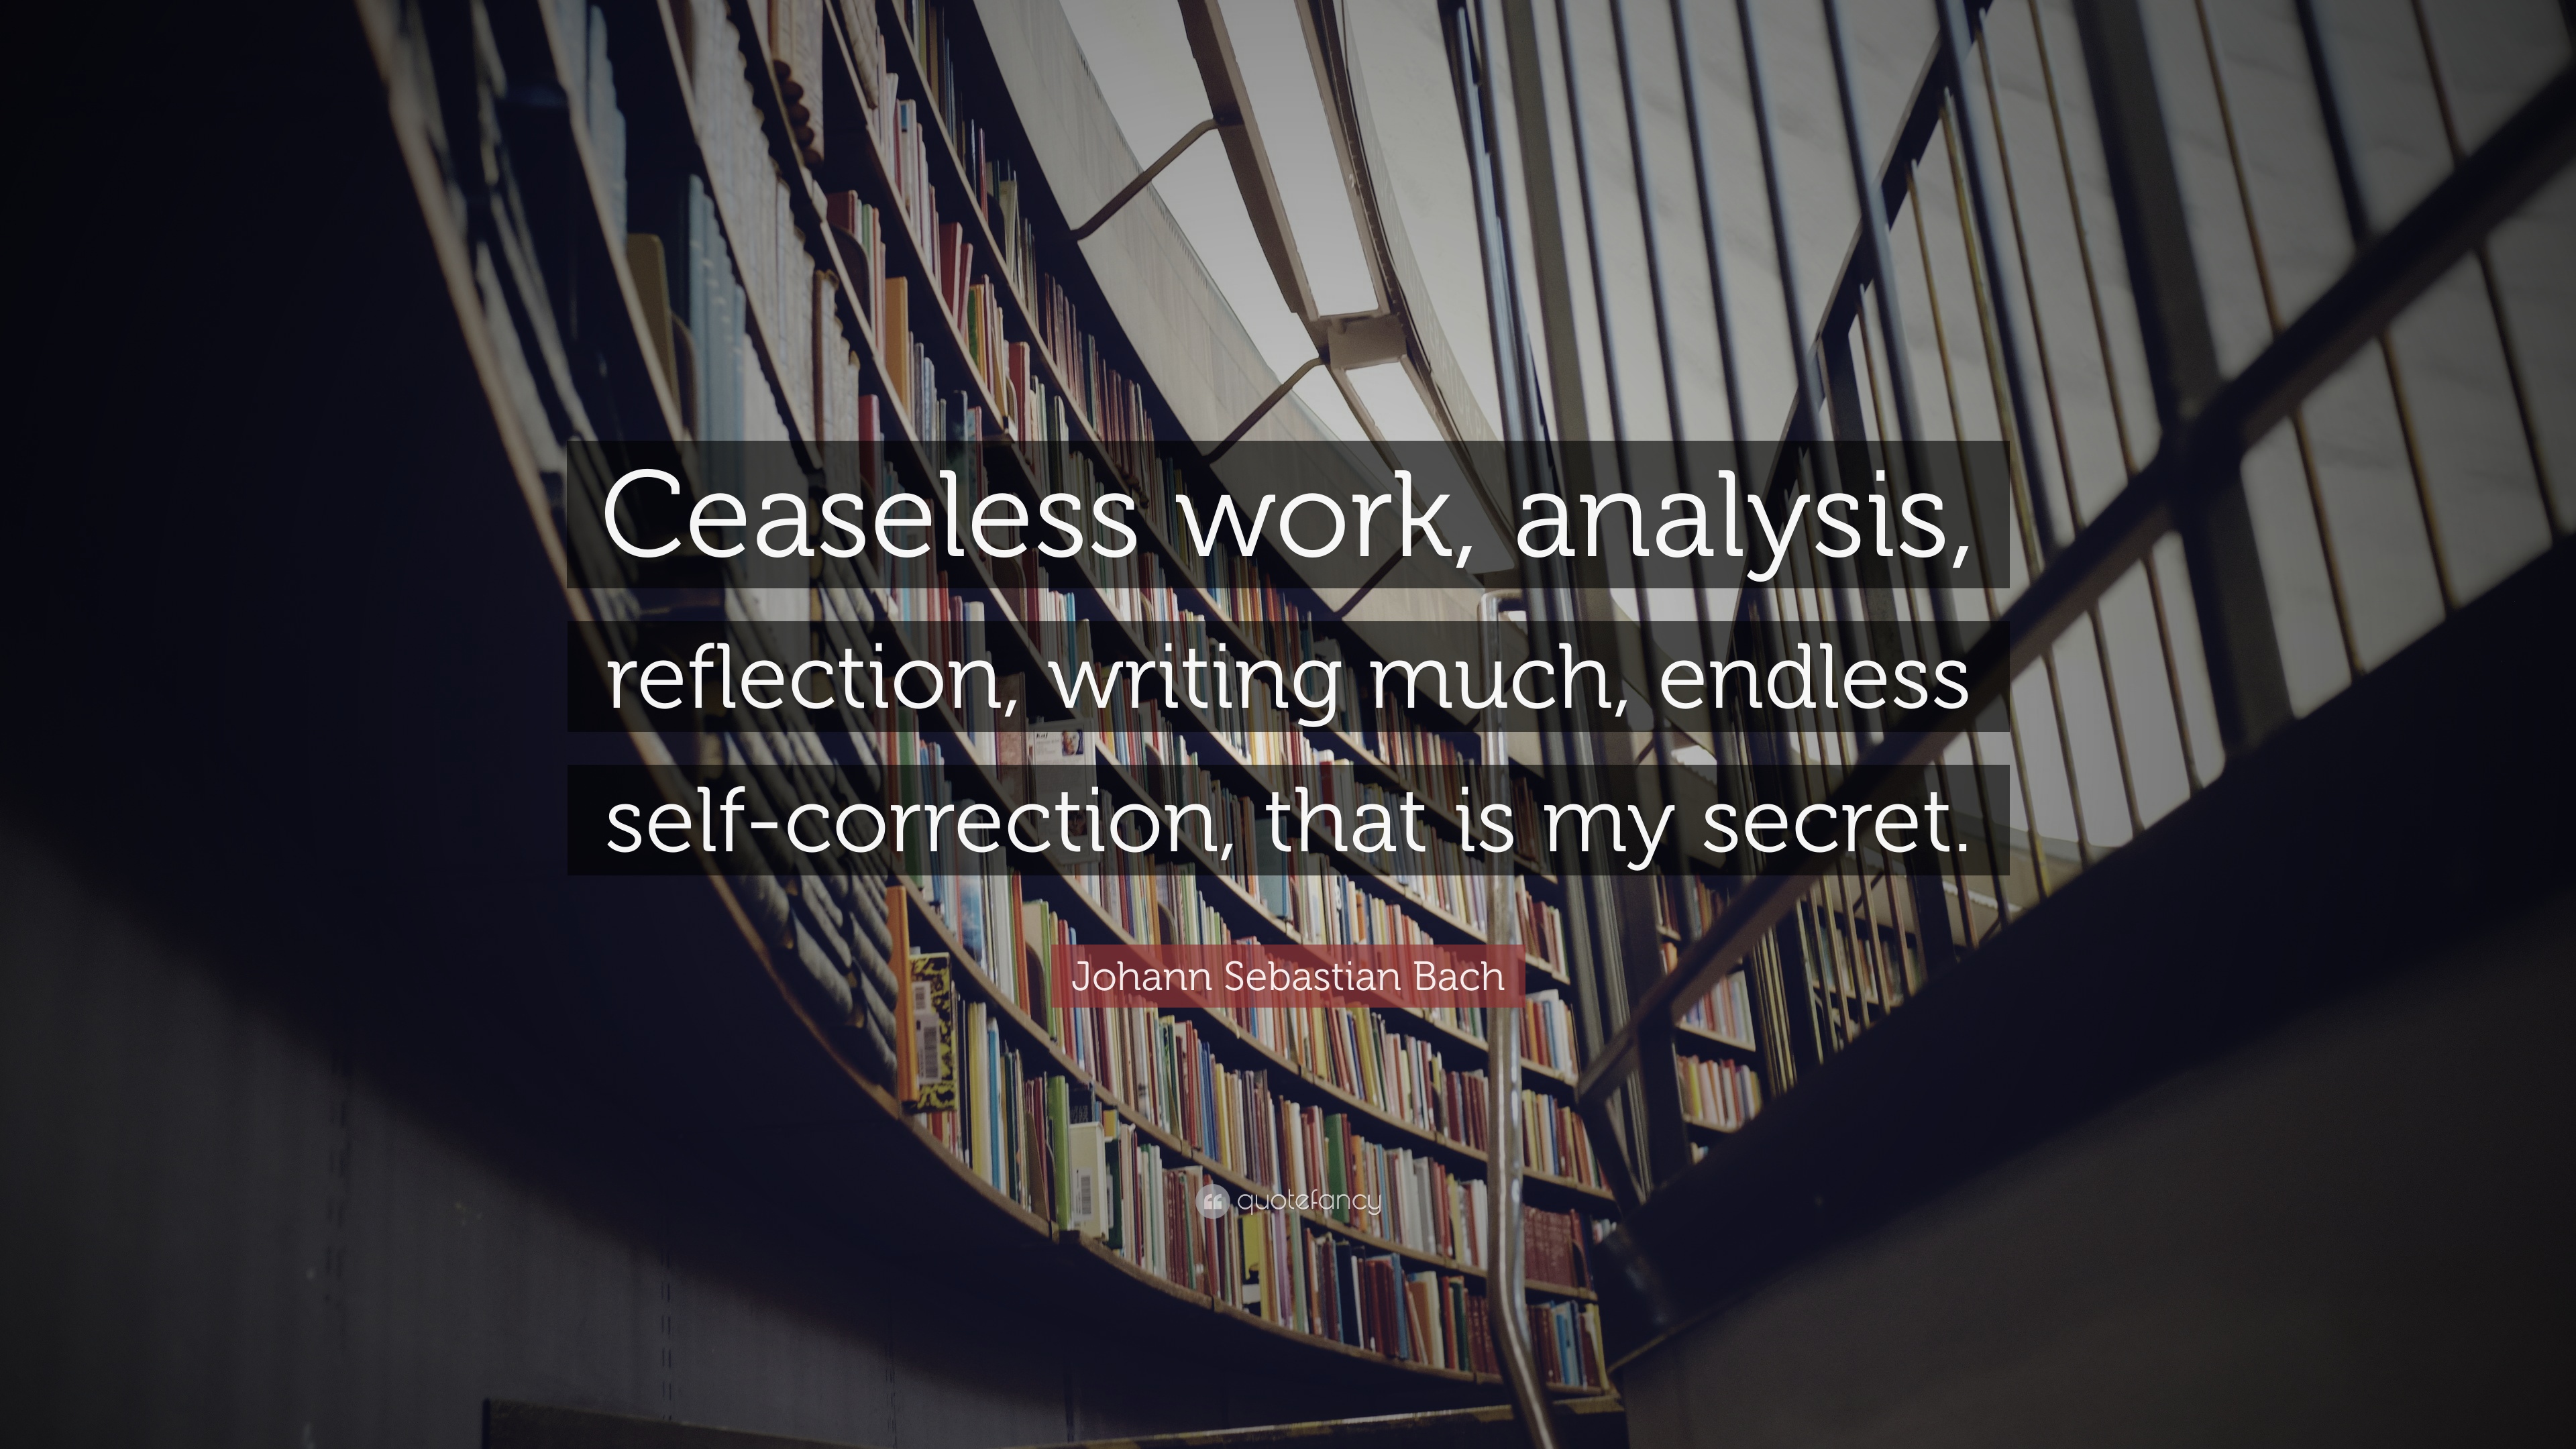 Johann Sebastian Bach Quote: “Ceaseless work, analysis, reflection